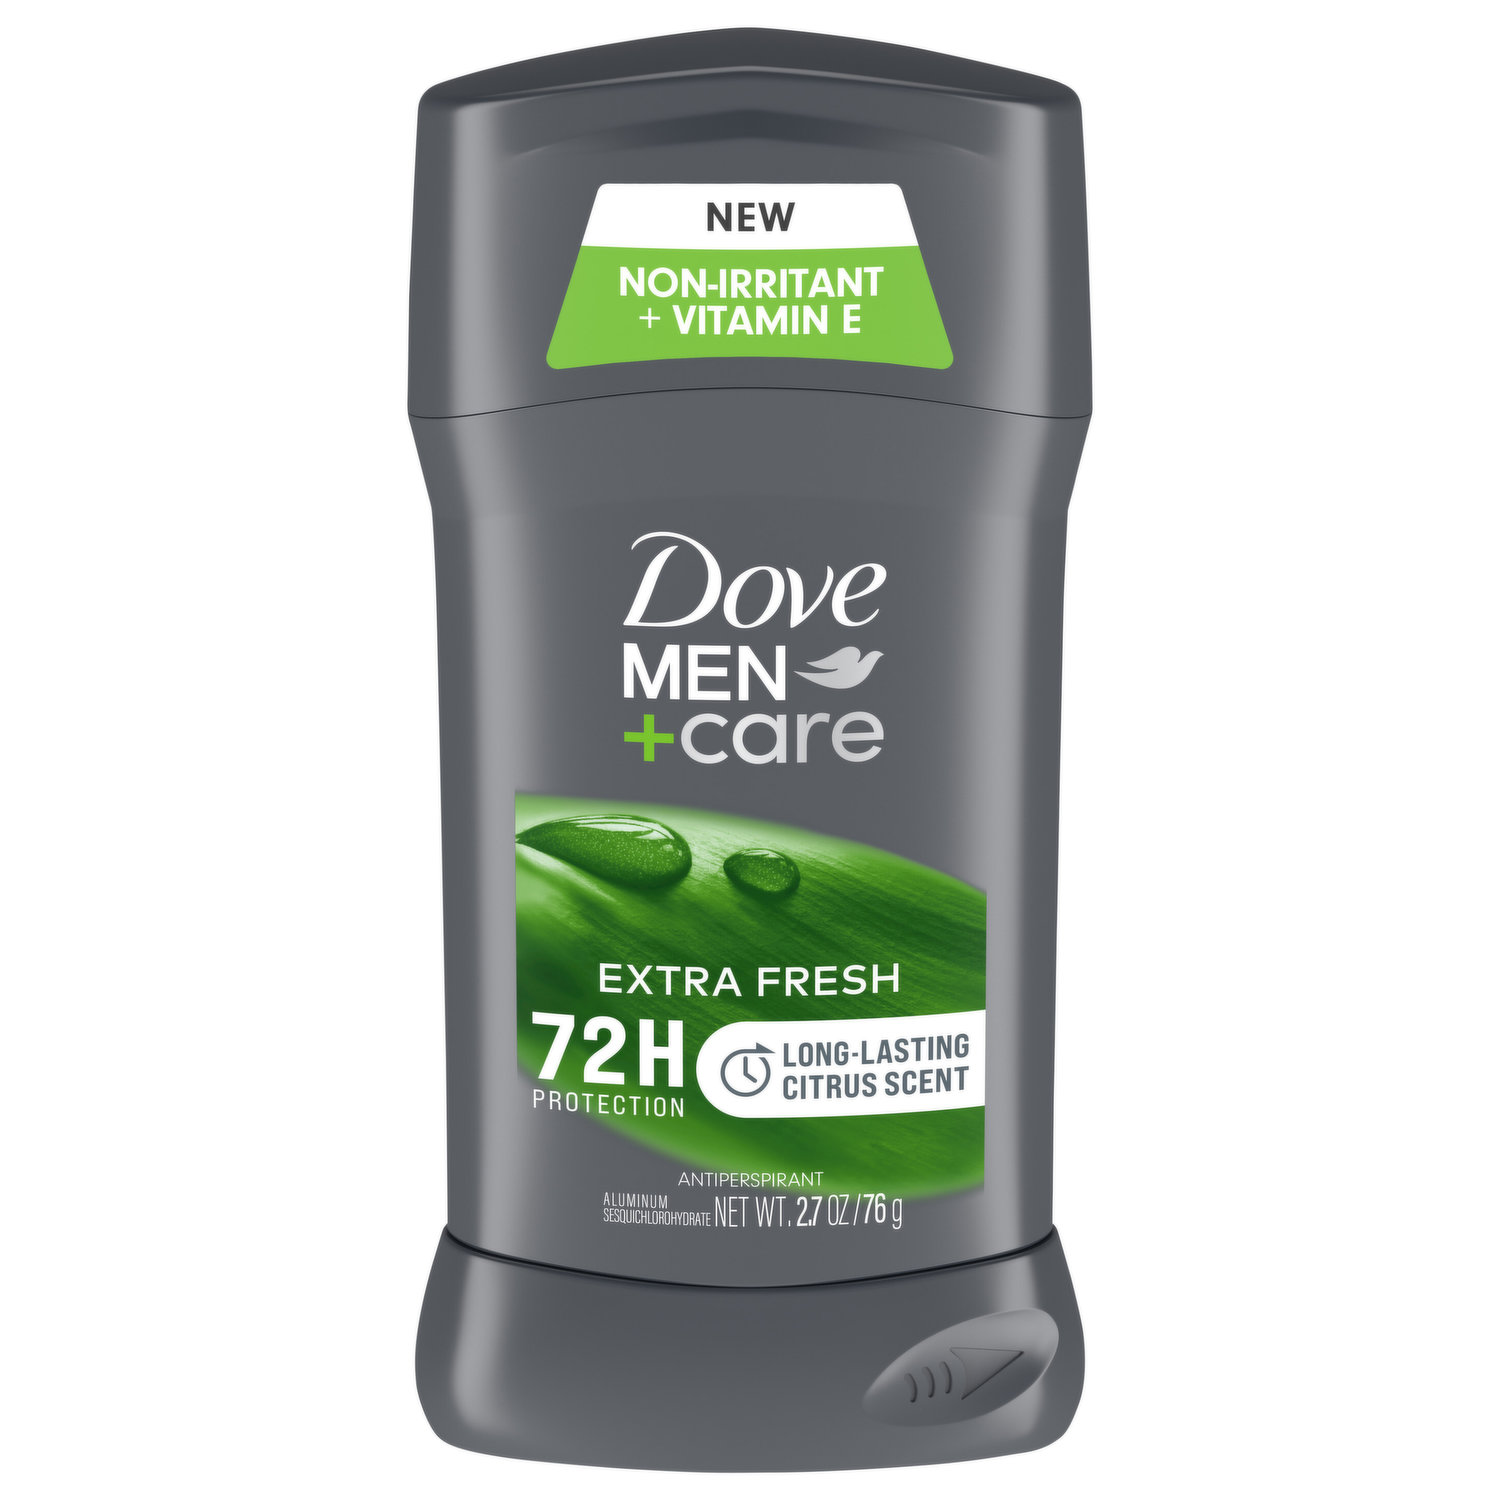 Dove Men+Care Antiperspirant, 72H Protection, Extra Fresh - King